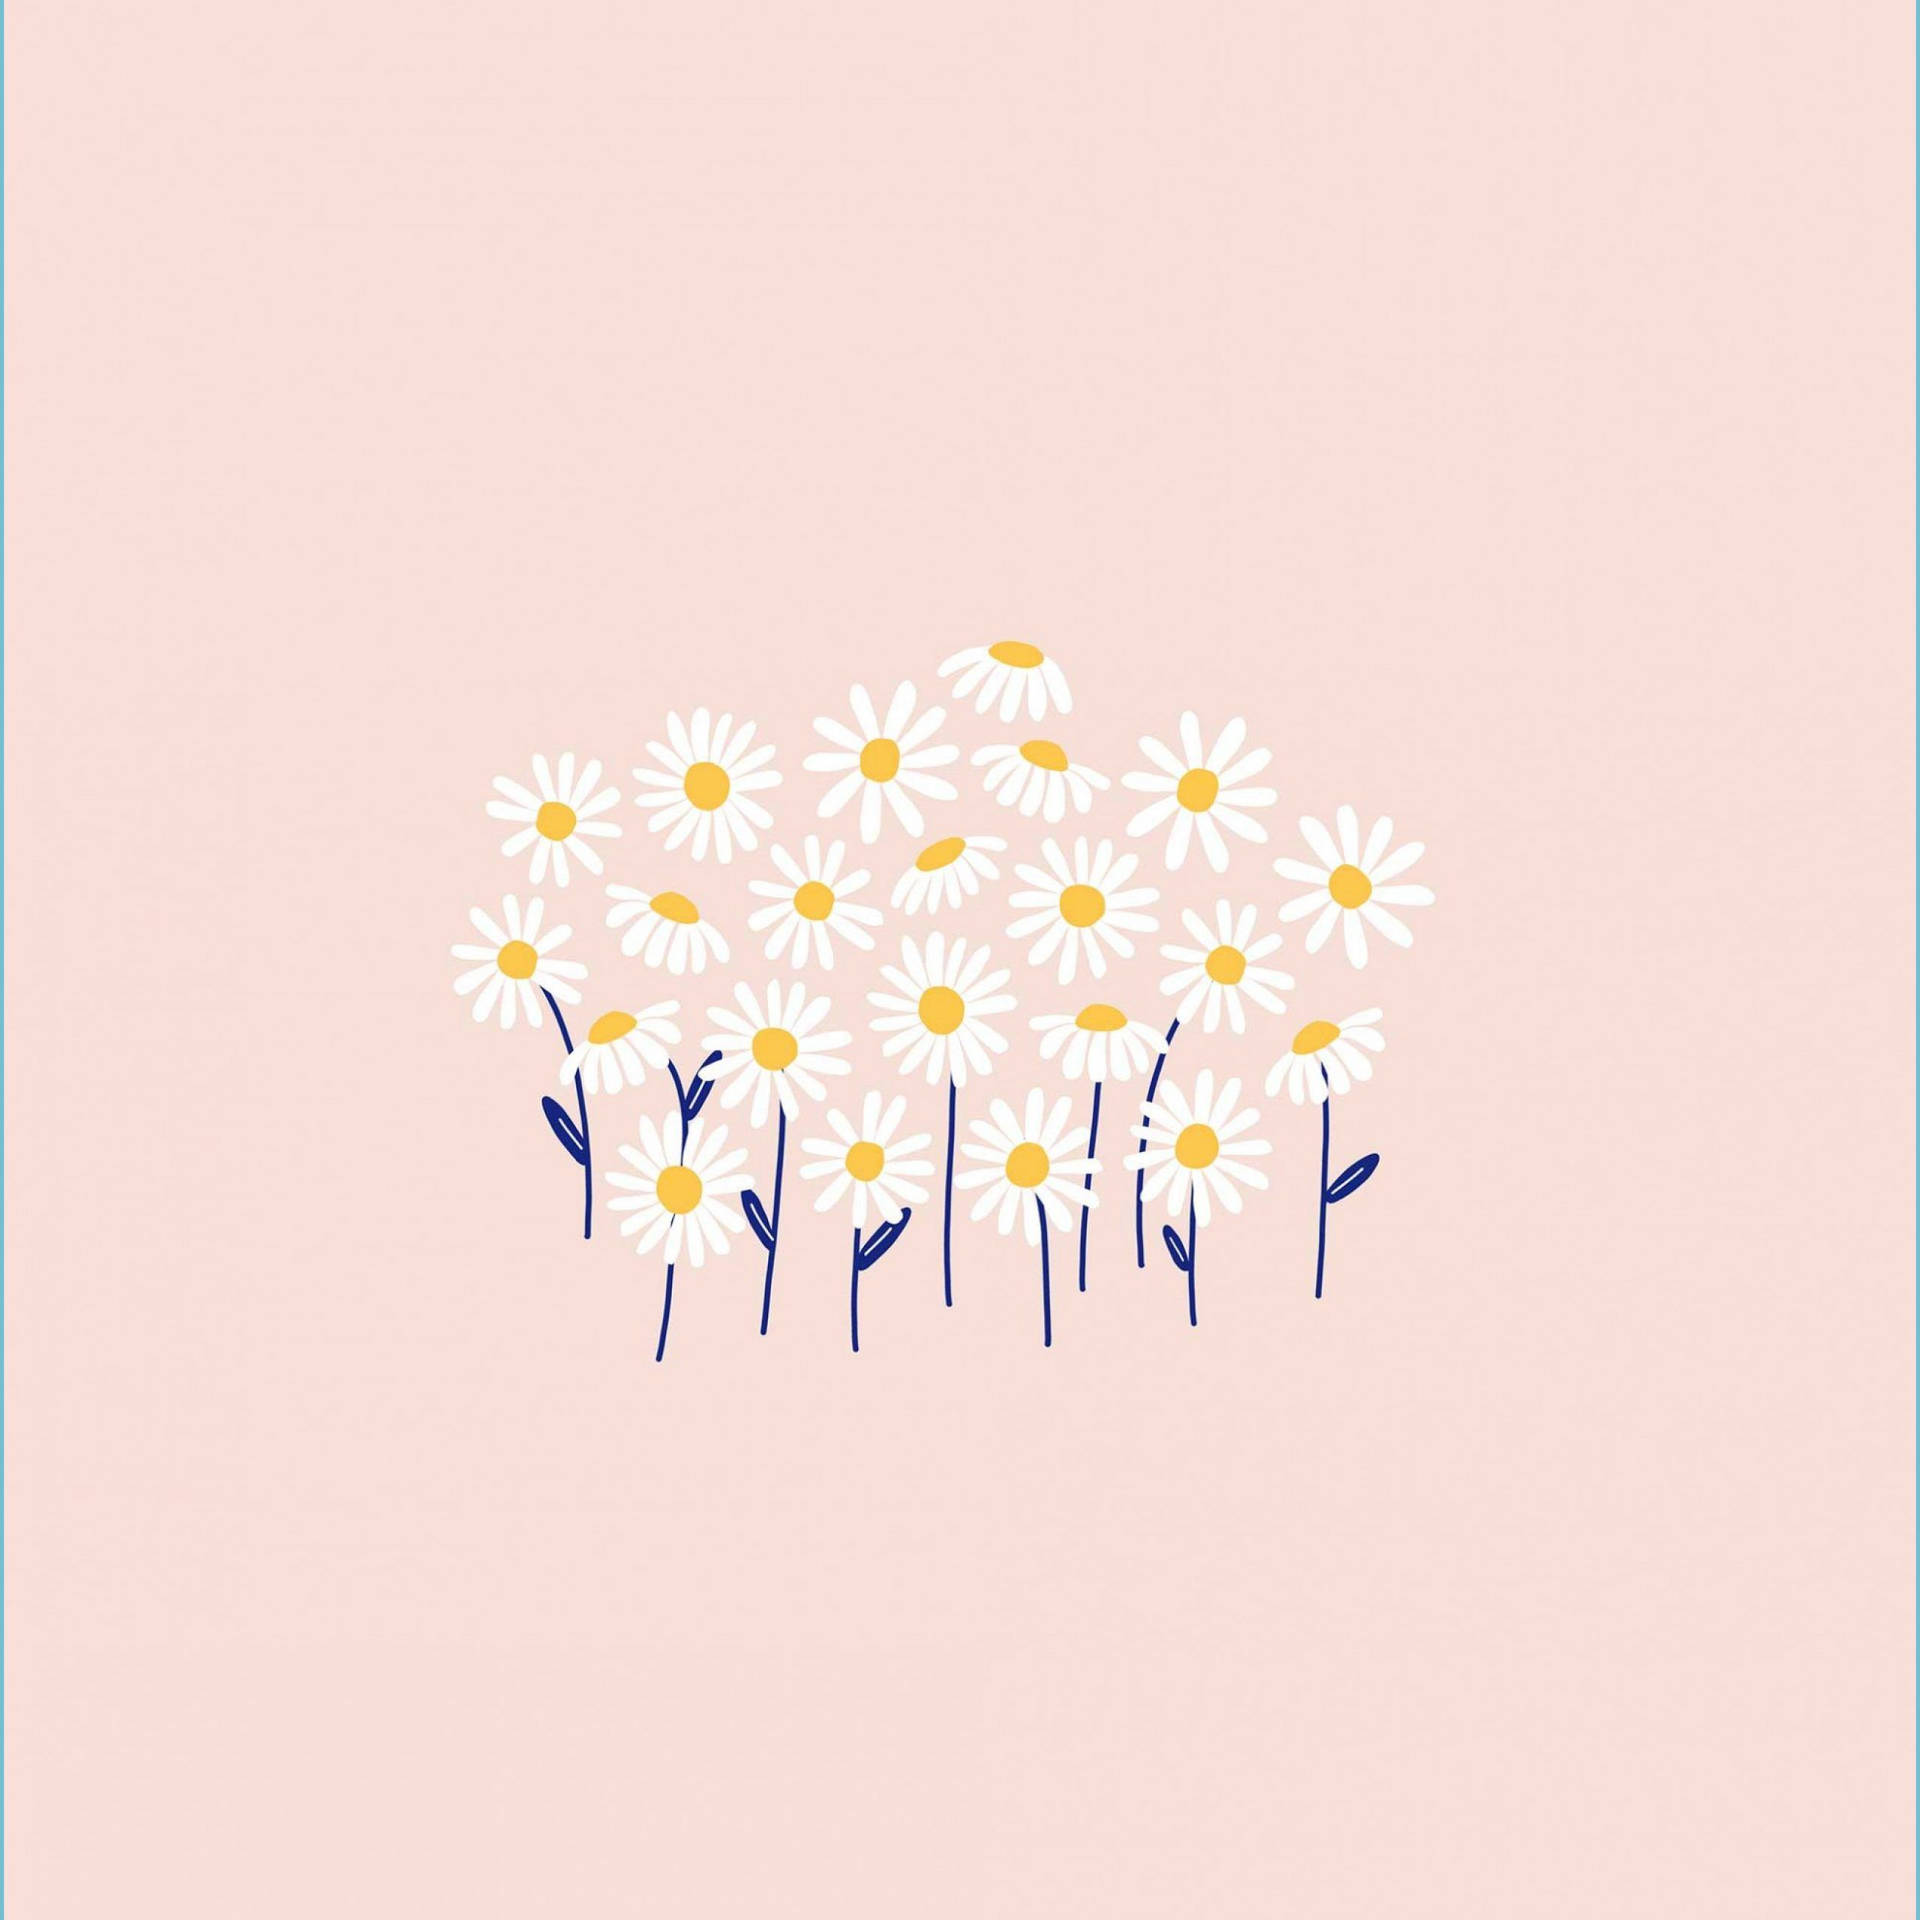 Simple Pink White Daisy Aesthetic Art Wallpaper